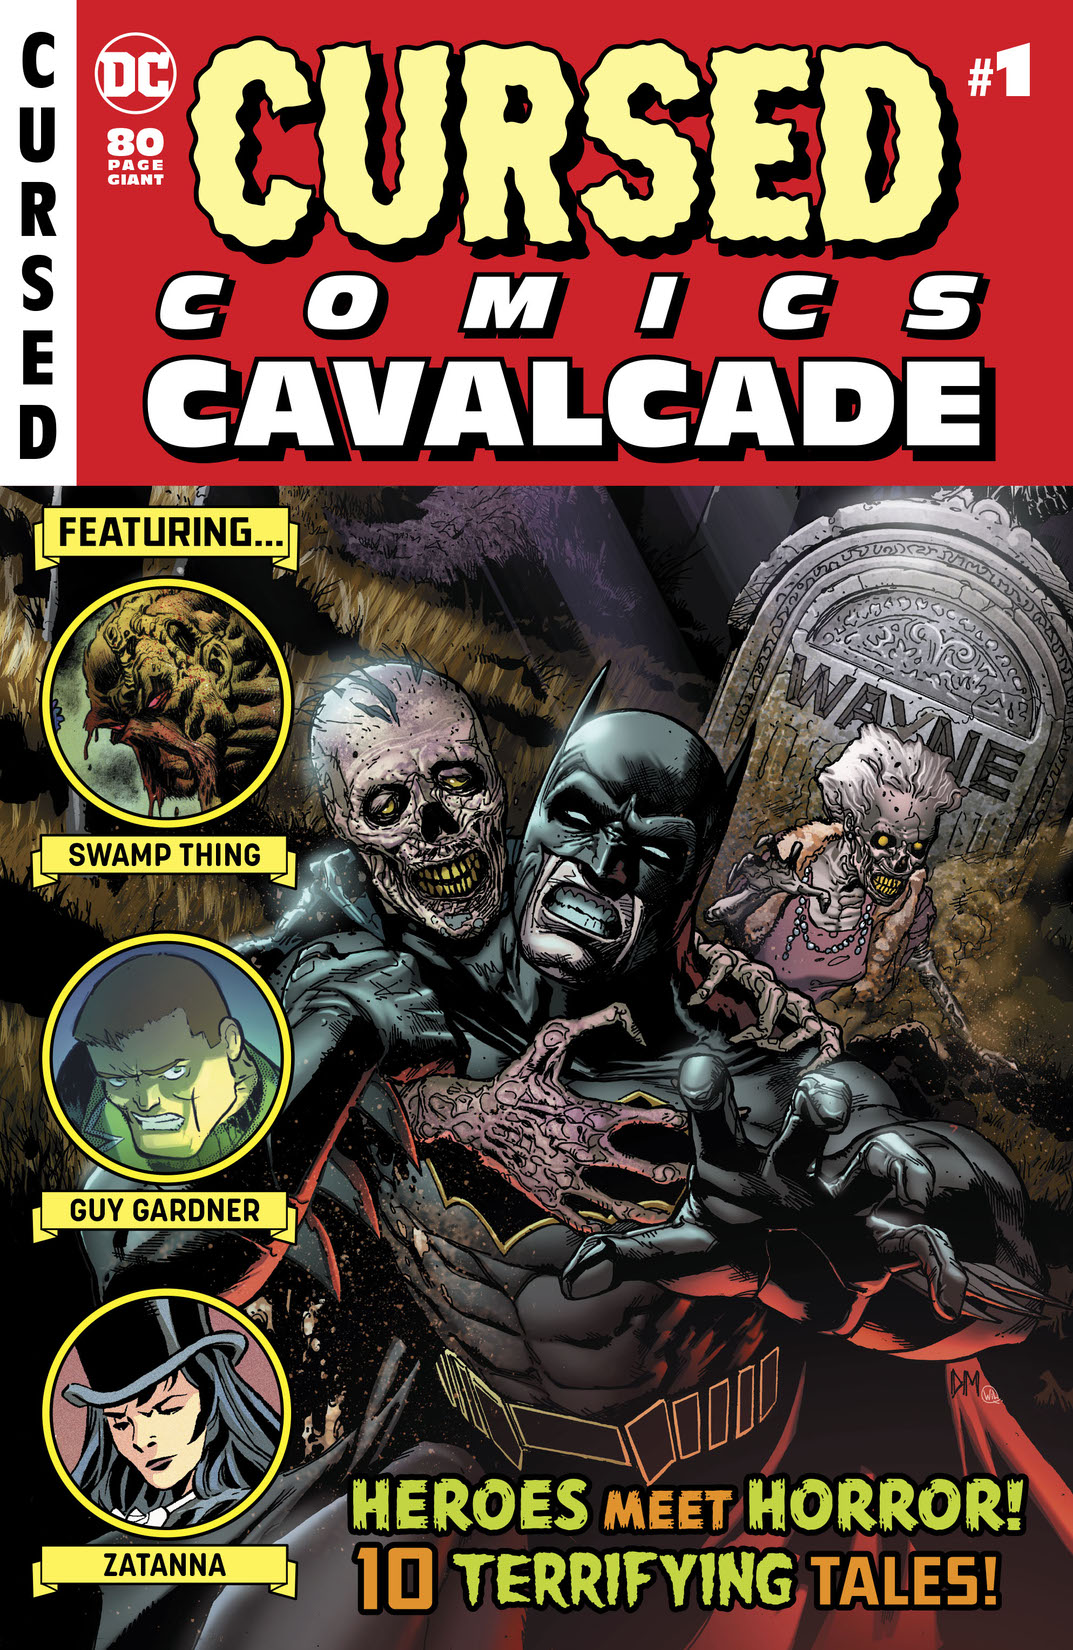 Cursed Comics Cavalcade #1 preview images